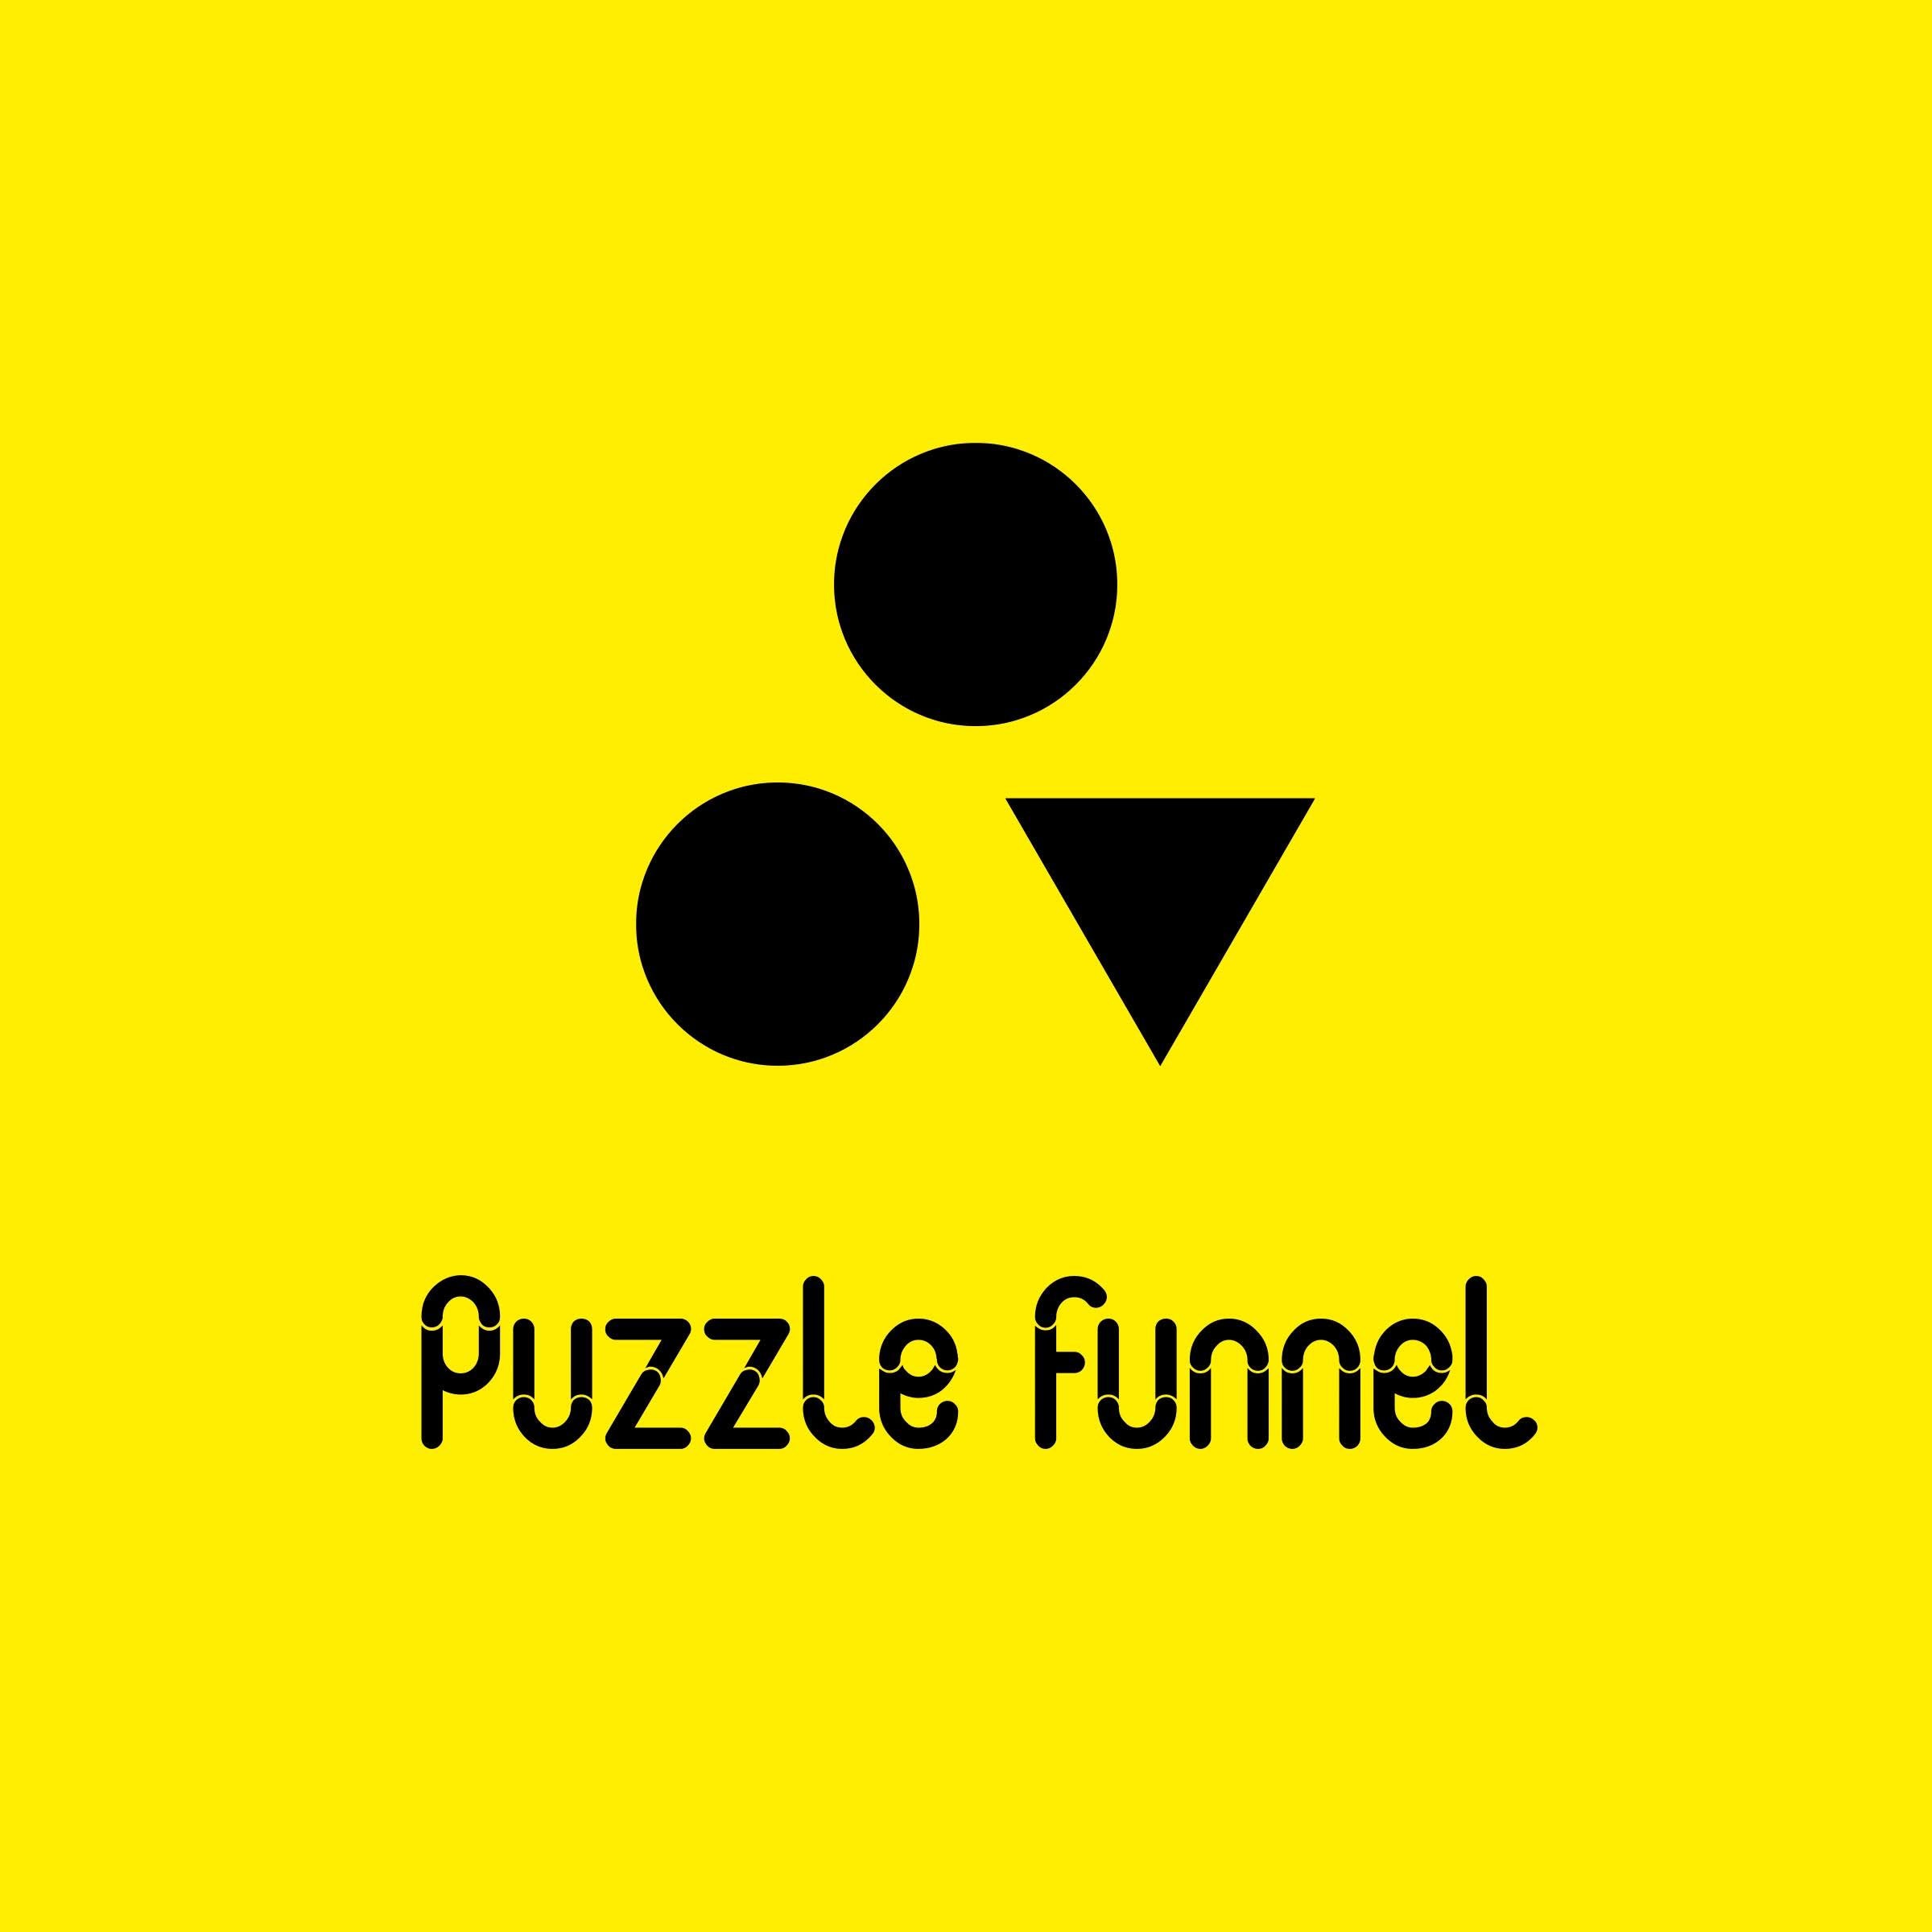 Puzzle Funnel QuizBob Productions